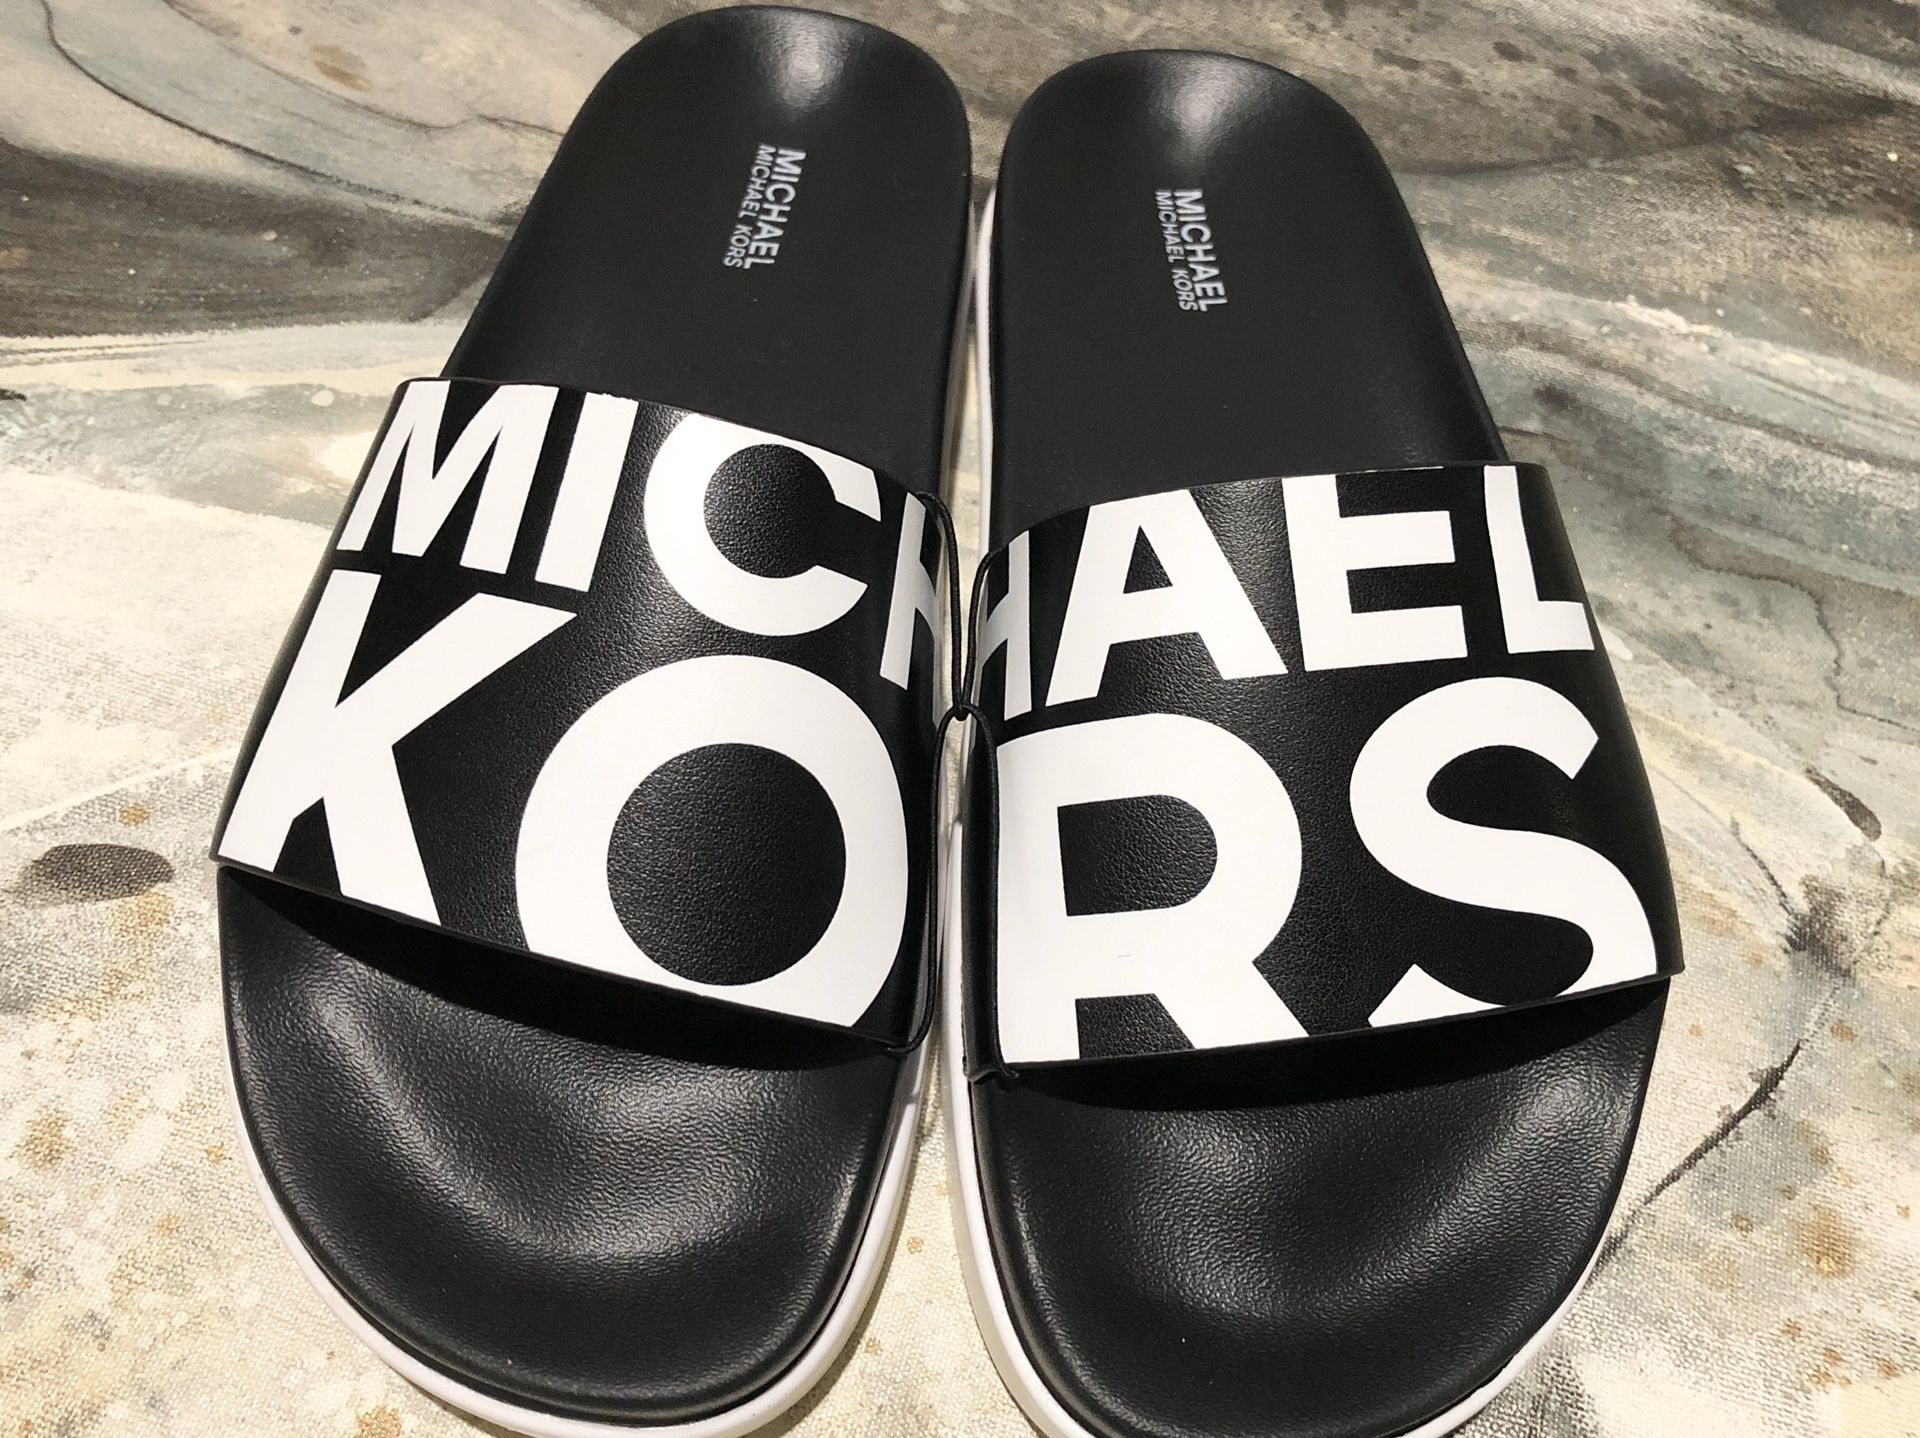 MICHAEL KORS Slides Sandals Shoes Women’s Size 8 Brand New